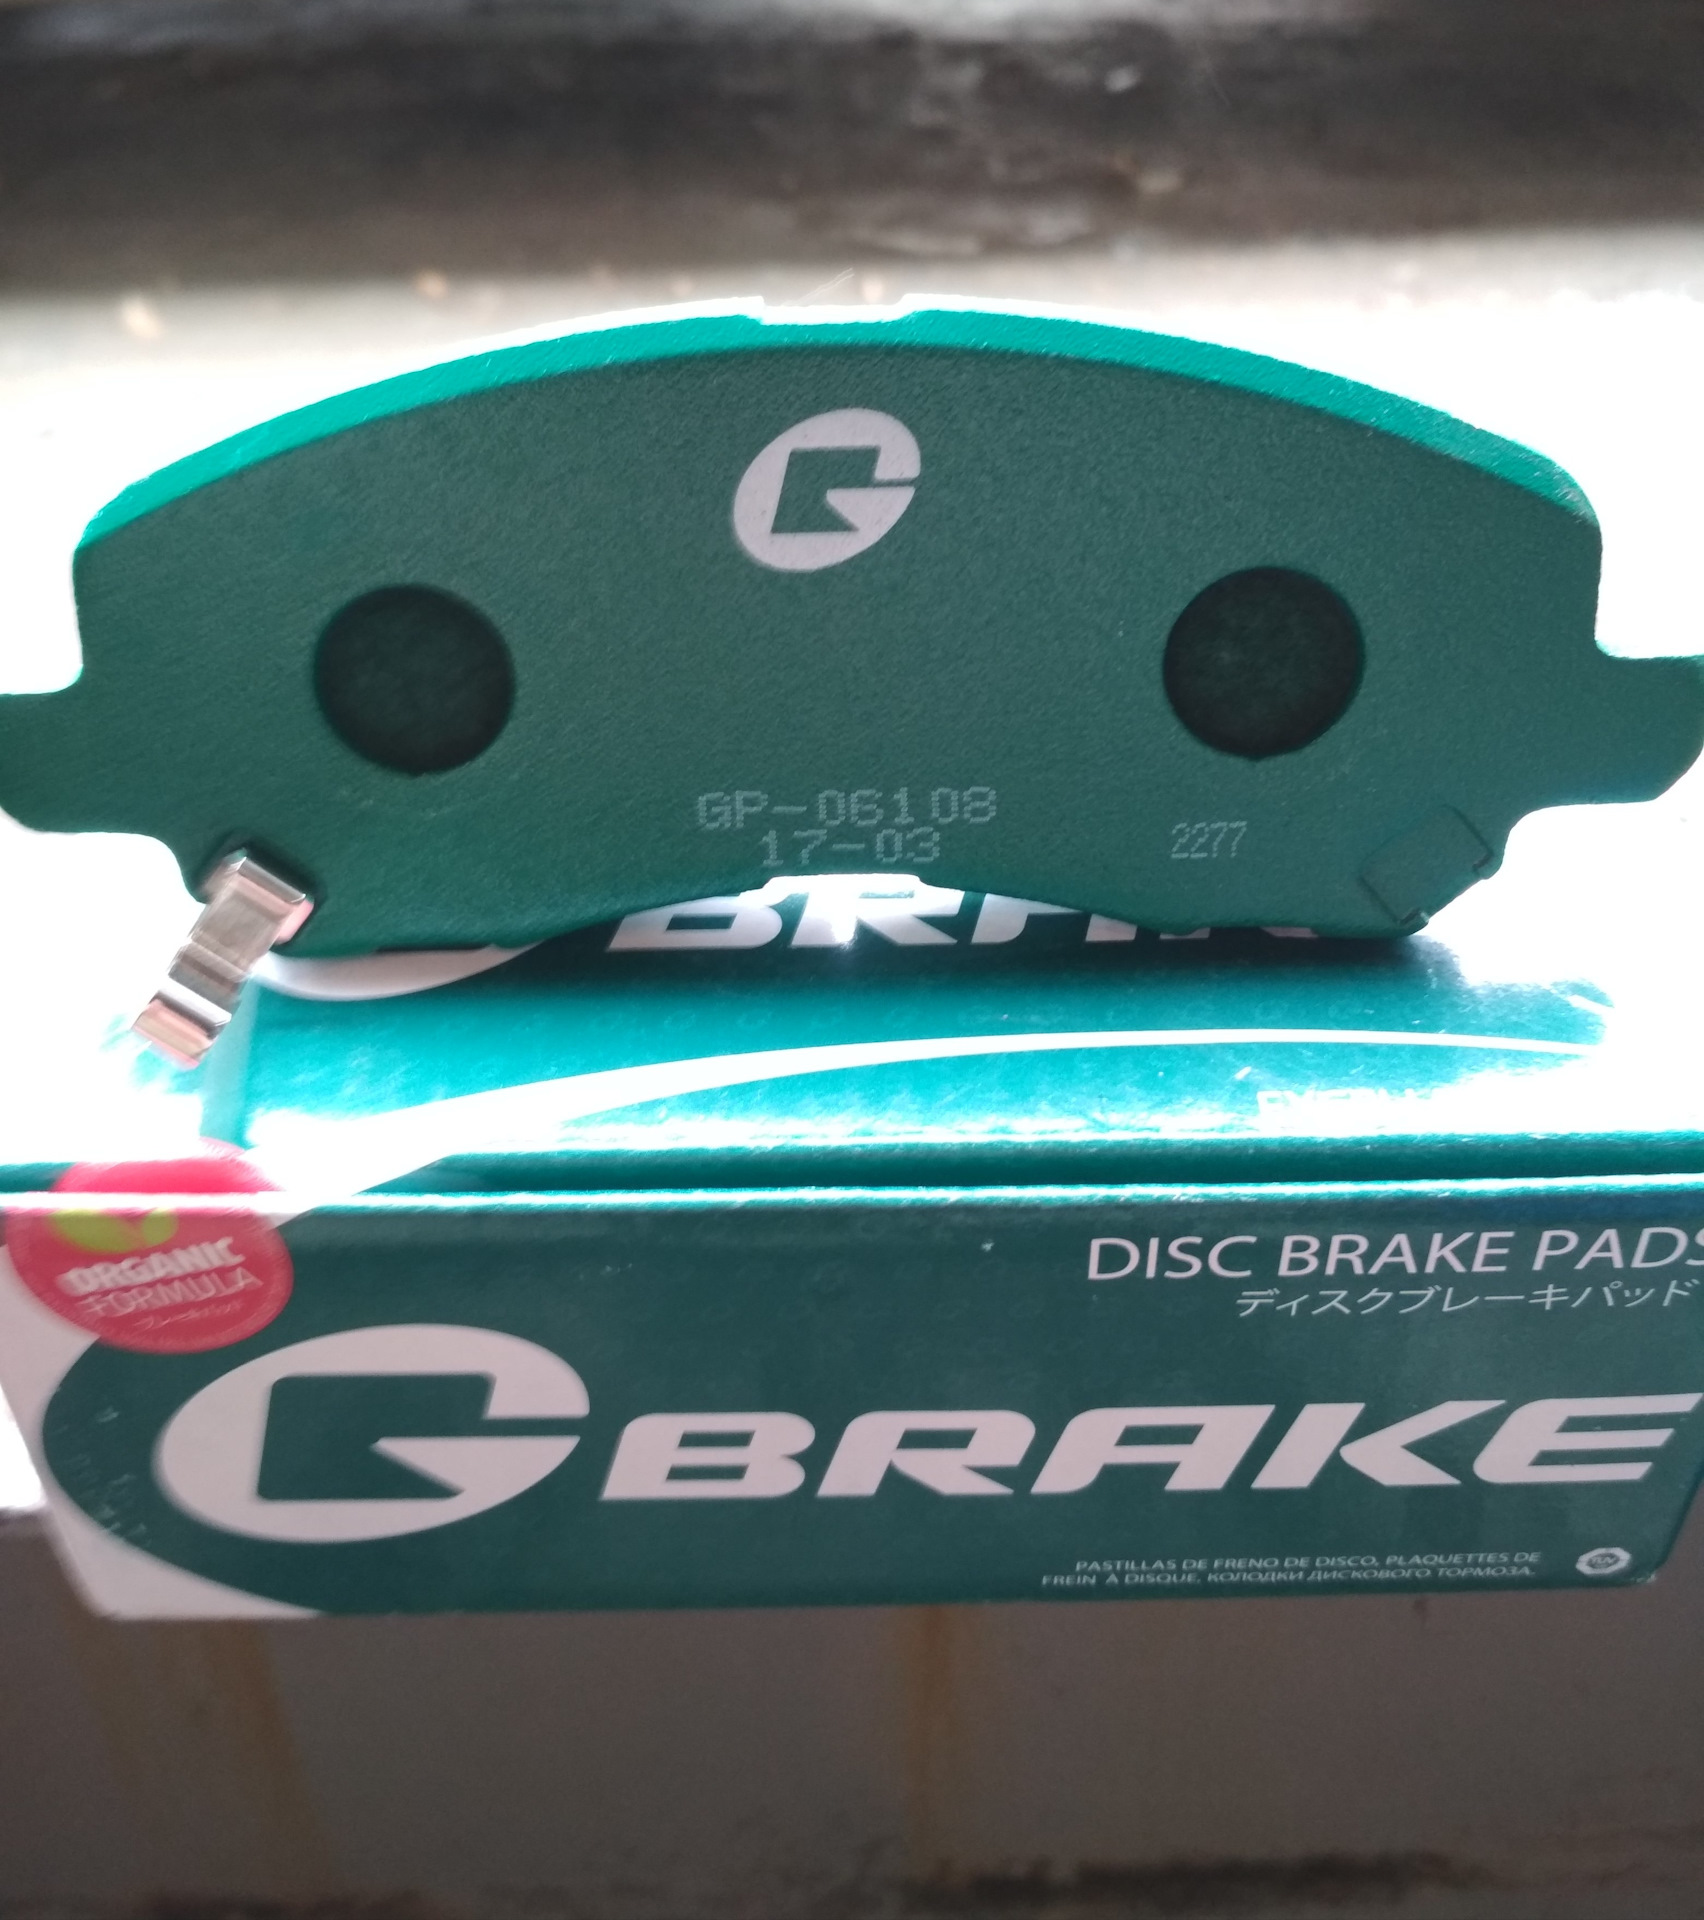 G brake производитель. G-Brake gp06108. Колодки g Brake фокус 2. G-Brake gp23024. G-Brake gp00038.